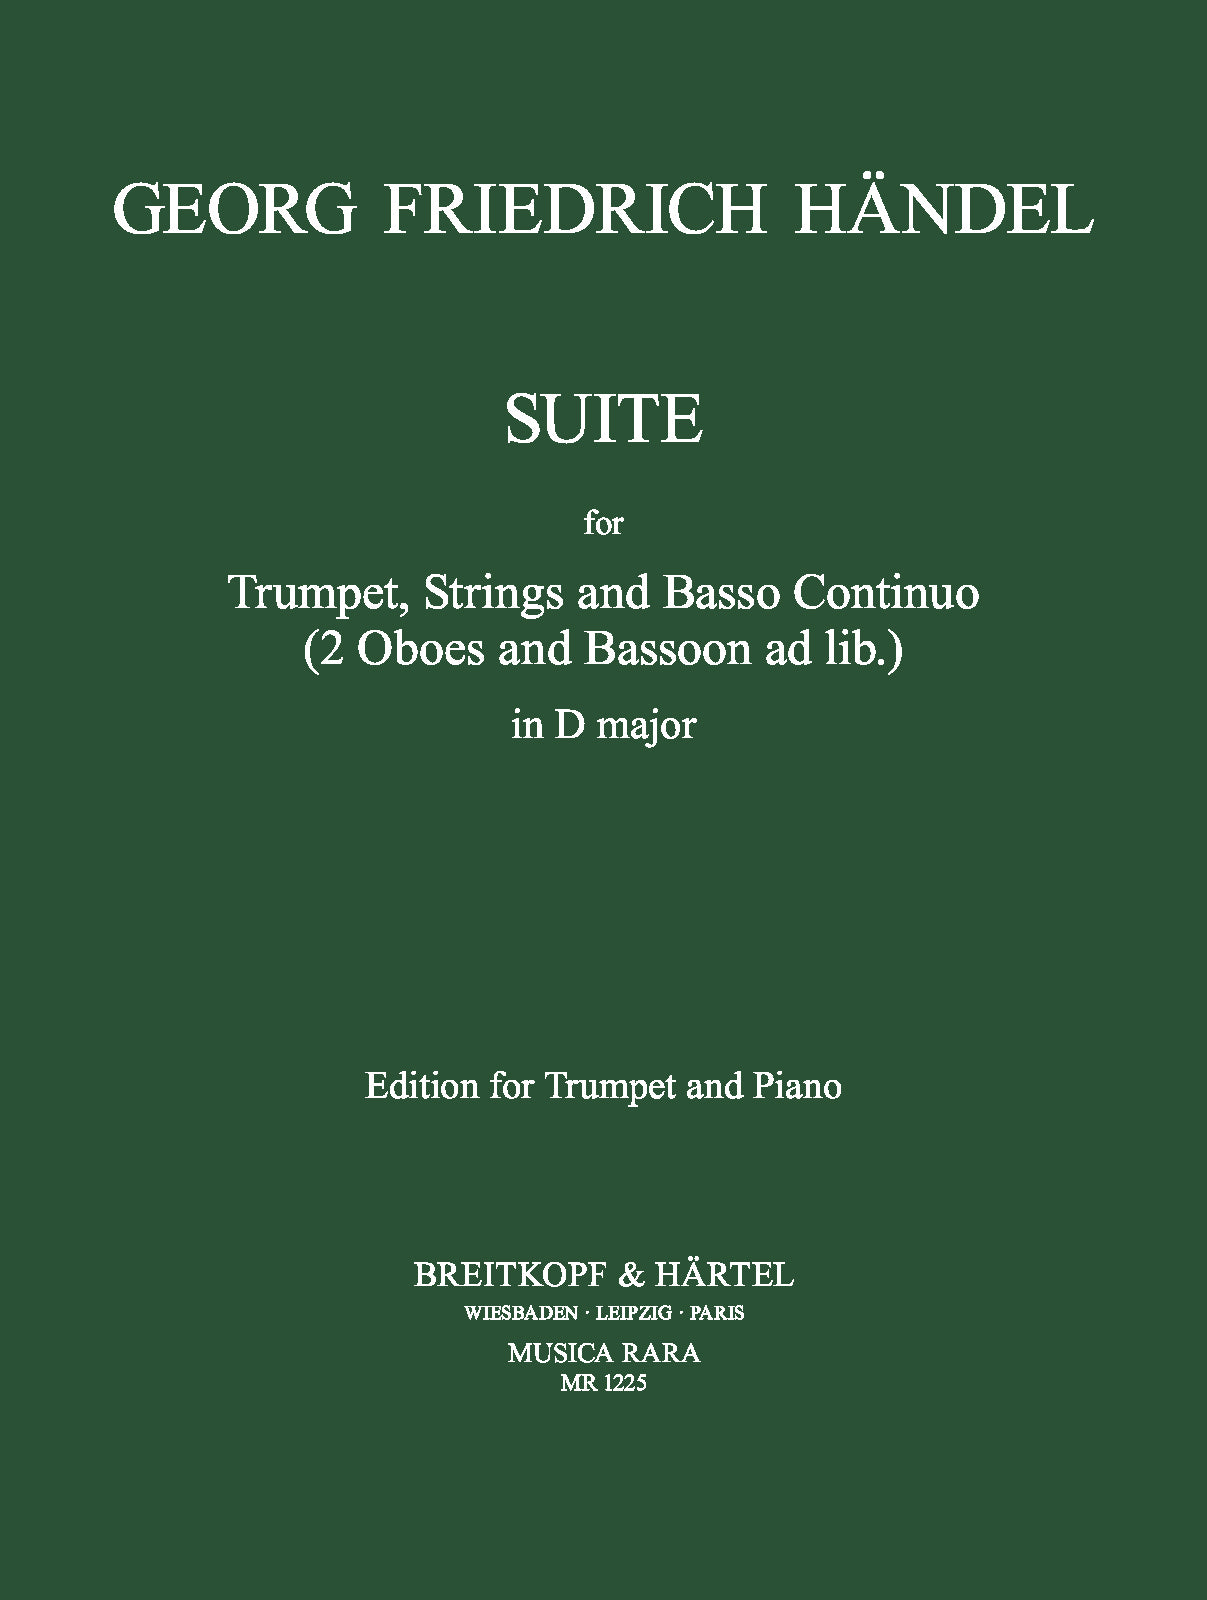 Handel: Suite in D Major from "Water Music", HWV 341